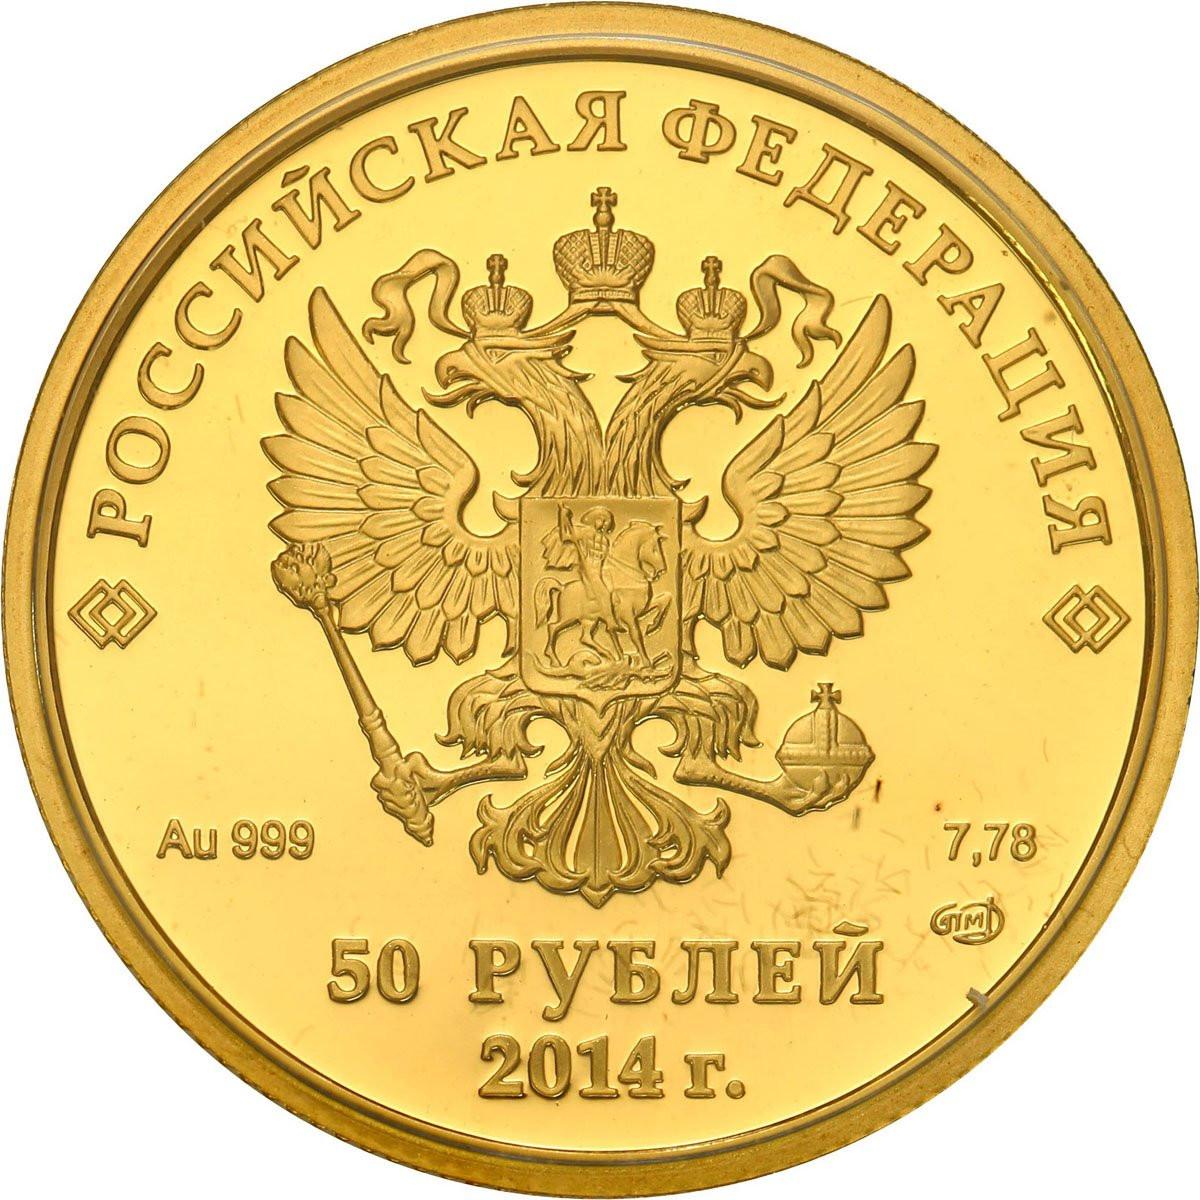 Rosja. 50 Rubli 2014 Olimpiada Soczi - Mecz Hokeja - 1/4 uncji złota